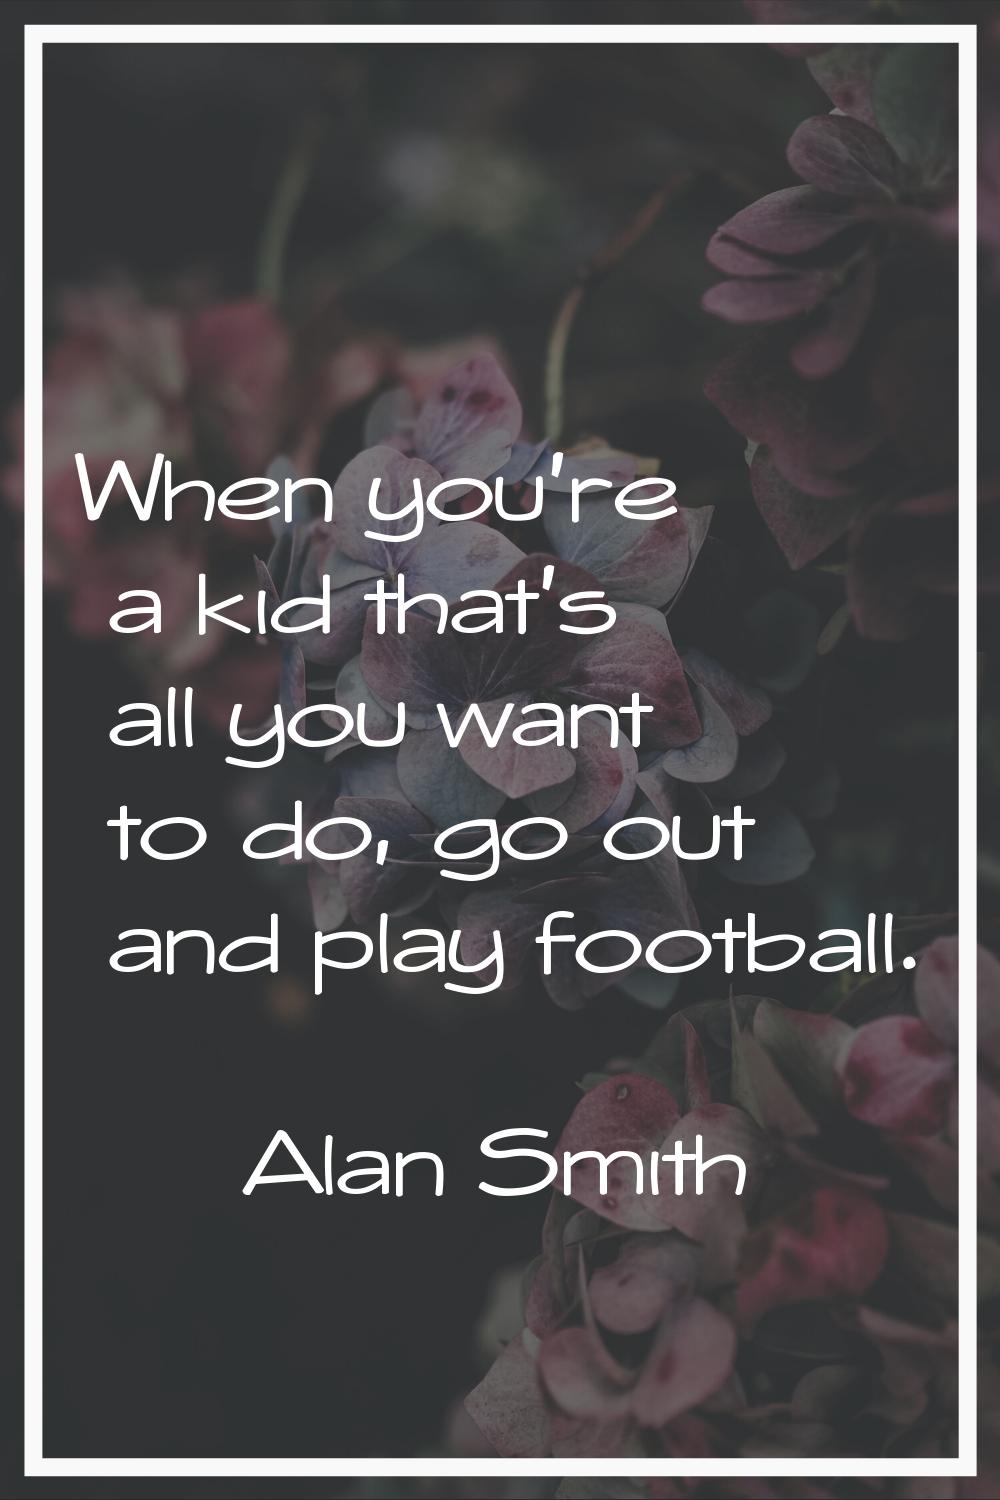 When you're a kid that's all you want to do, go out and play football.